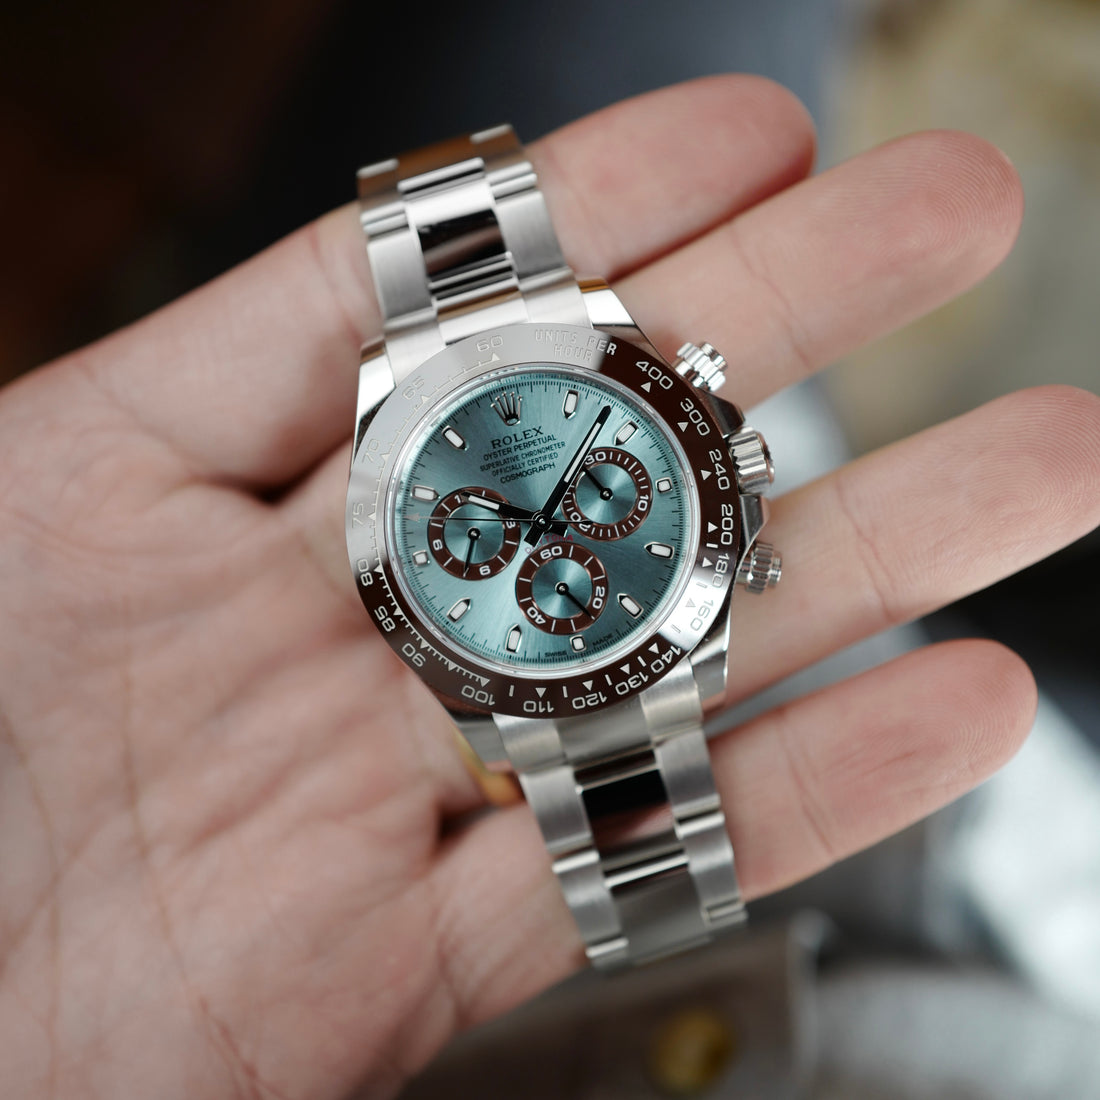 Rolex Platinum Cosmograph Daytona Watch Ref. 116506 (NEW ARRIVAL)